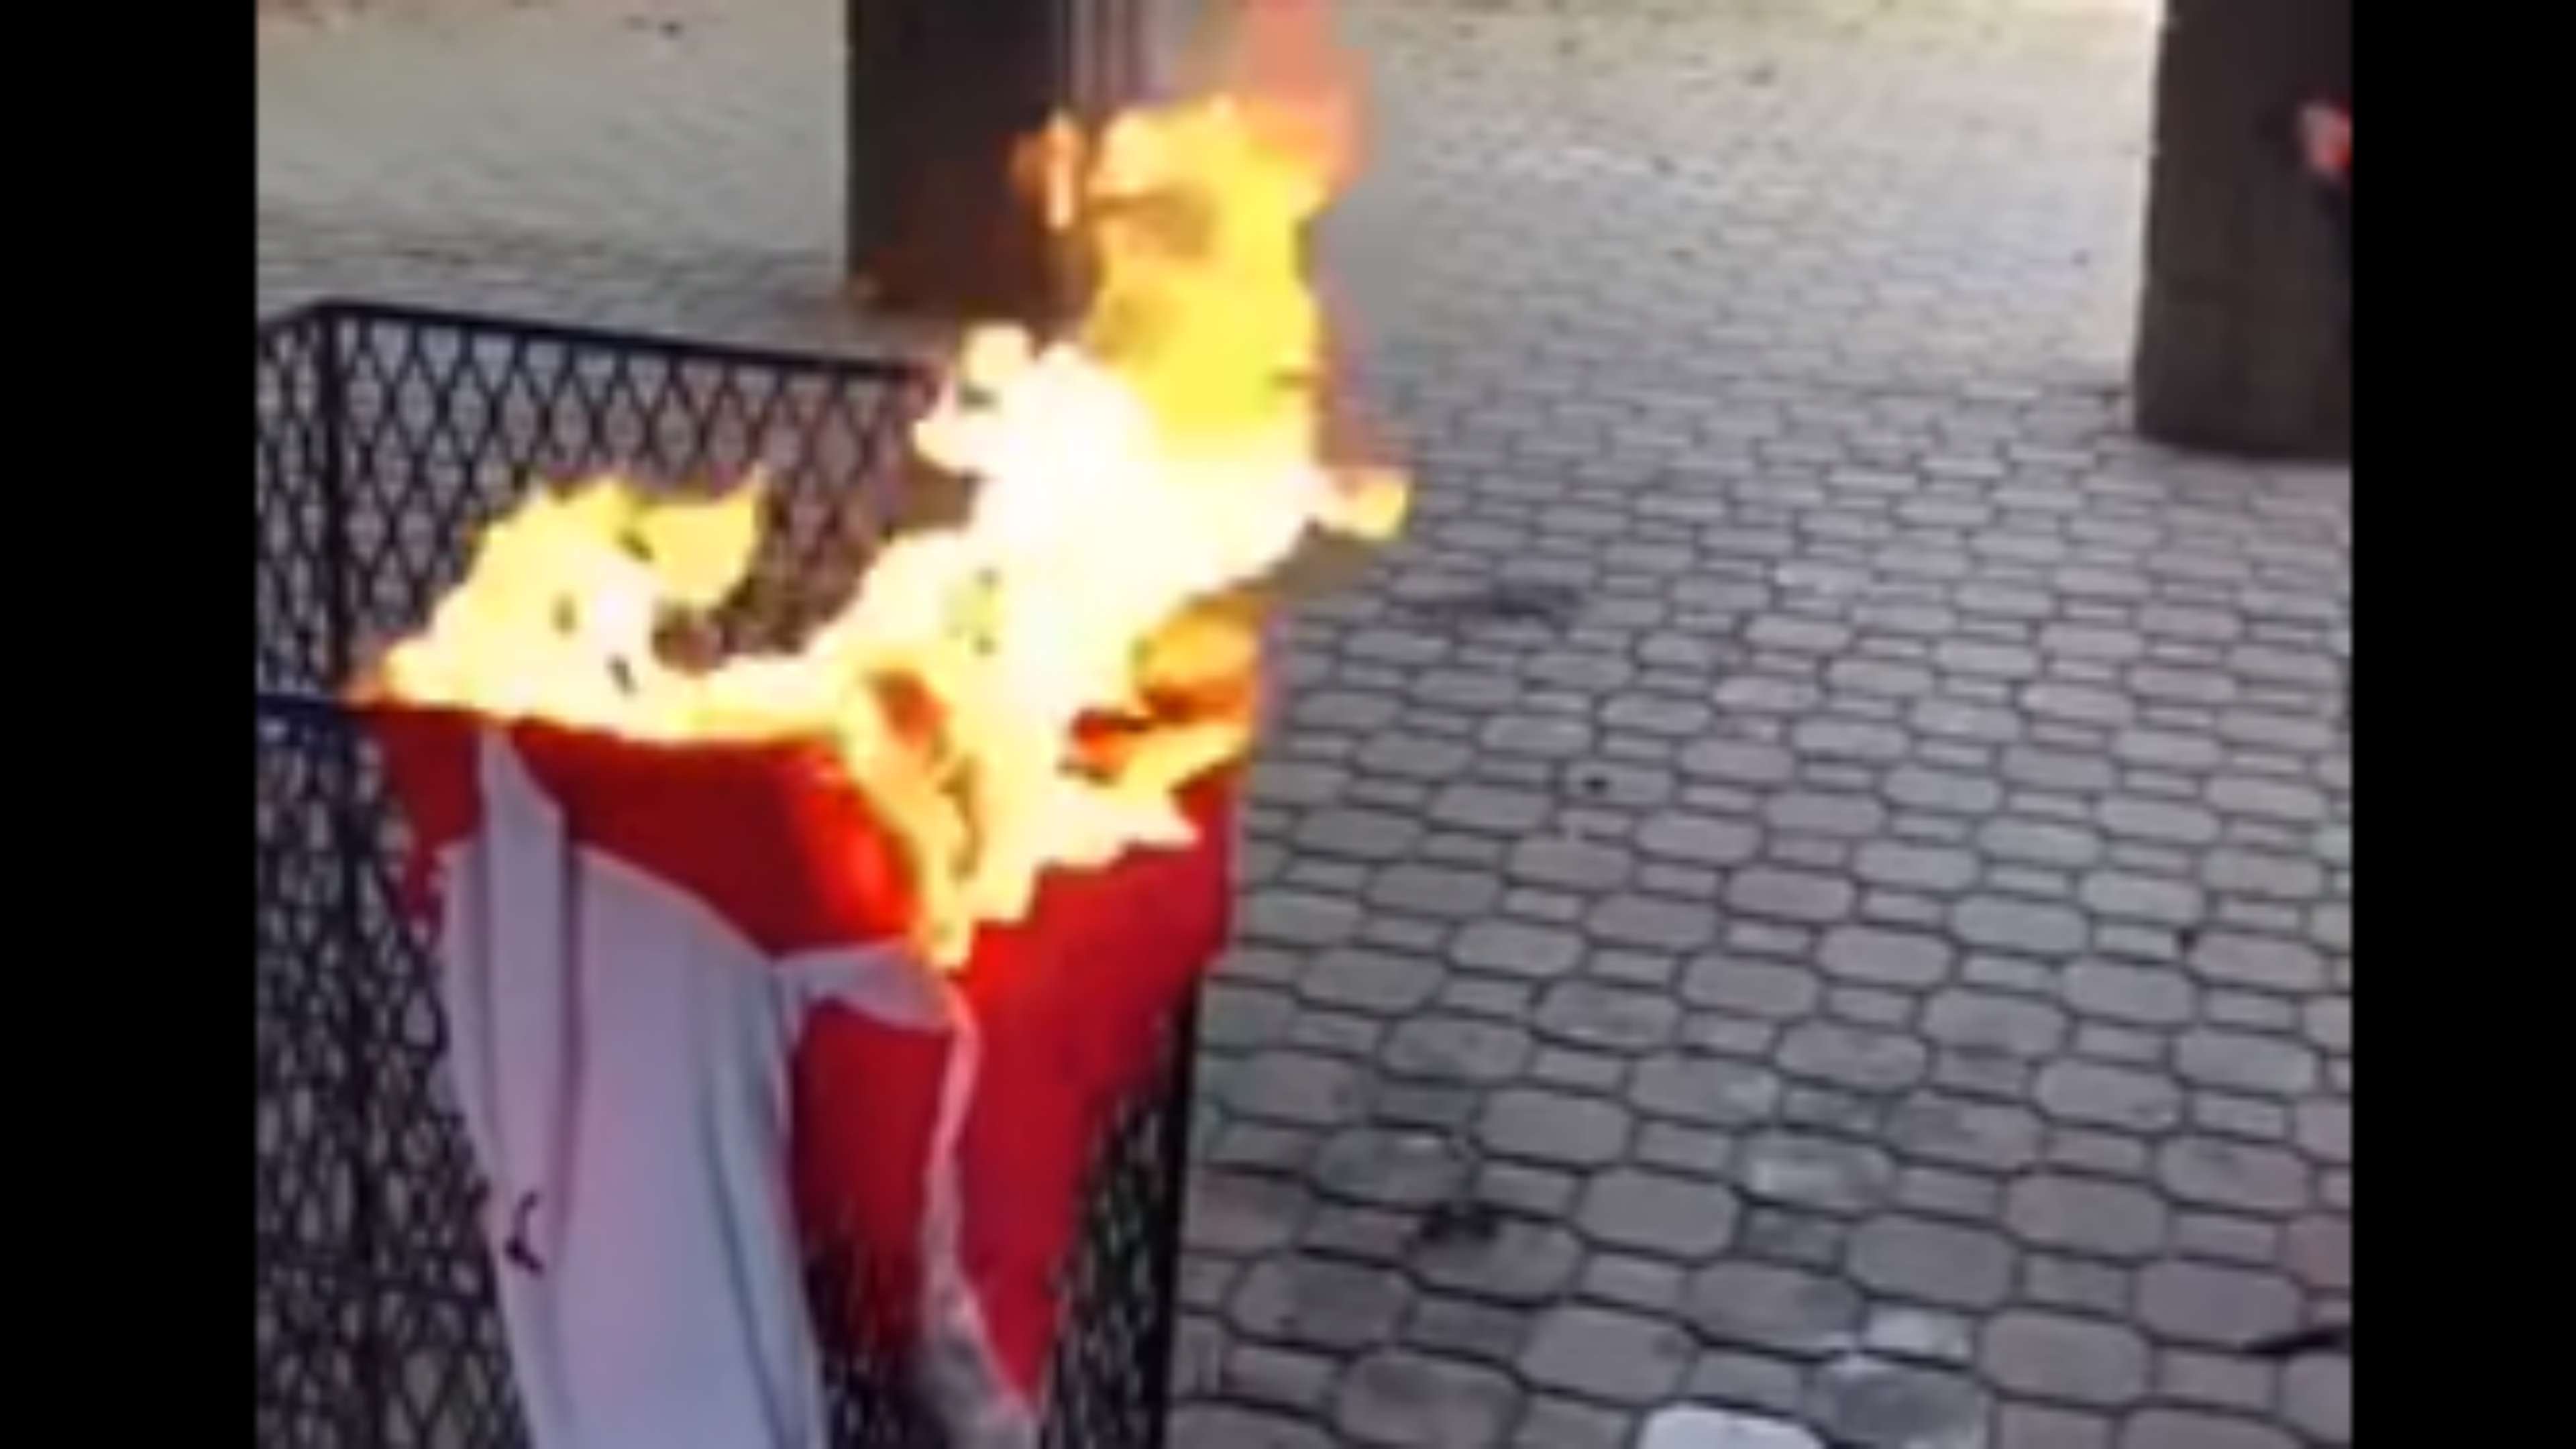 camiseta de Arsenal de Alexis Sánchez, quemada